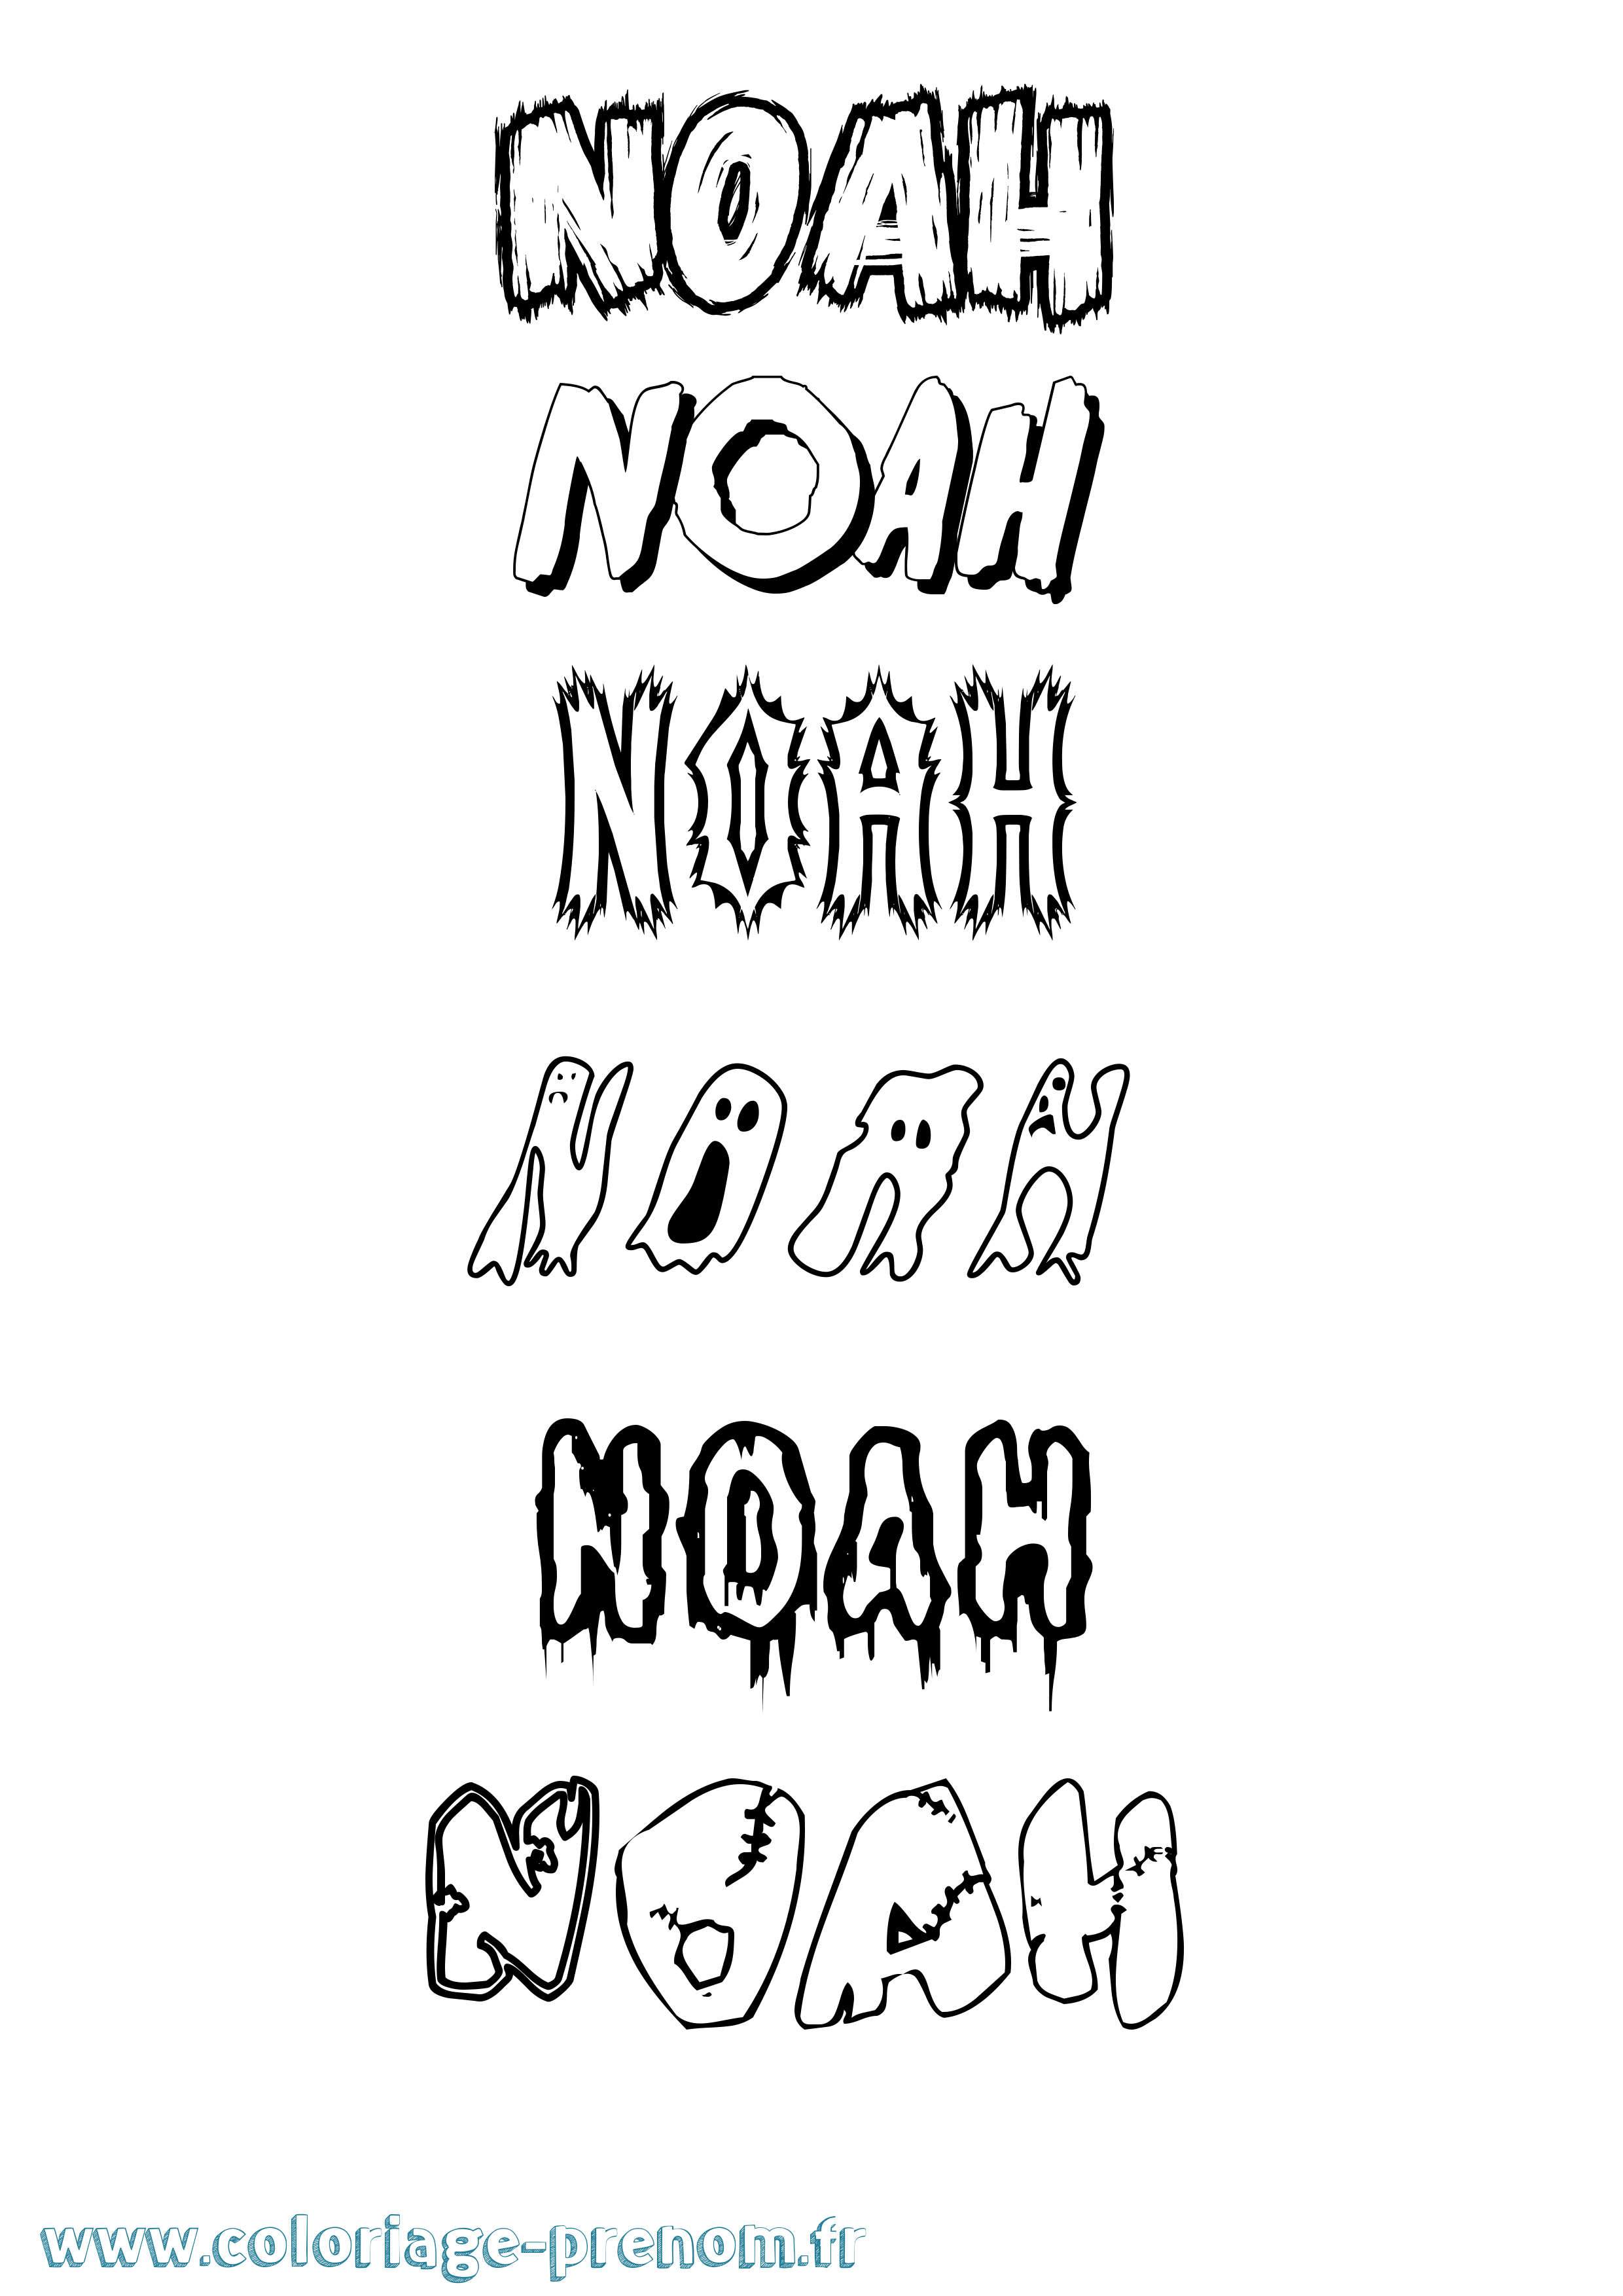 Coloriage prénom Noah